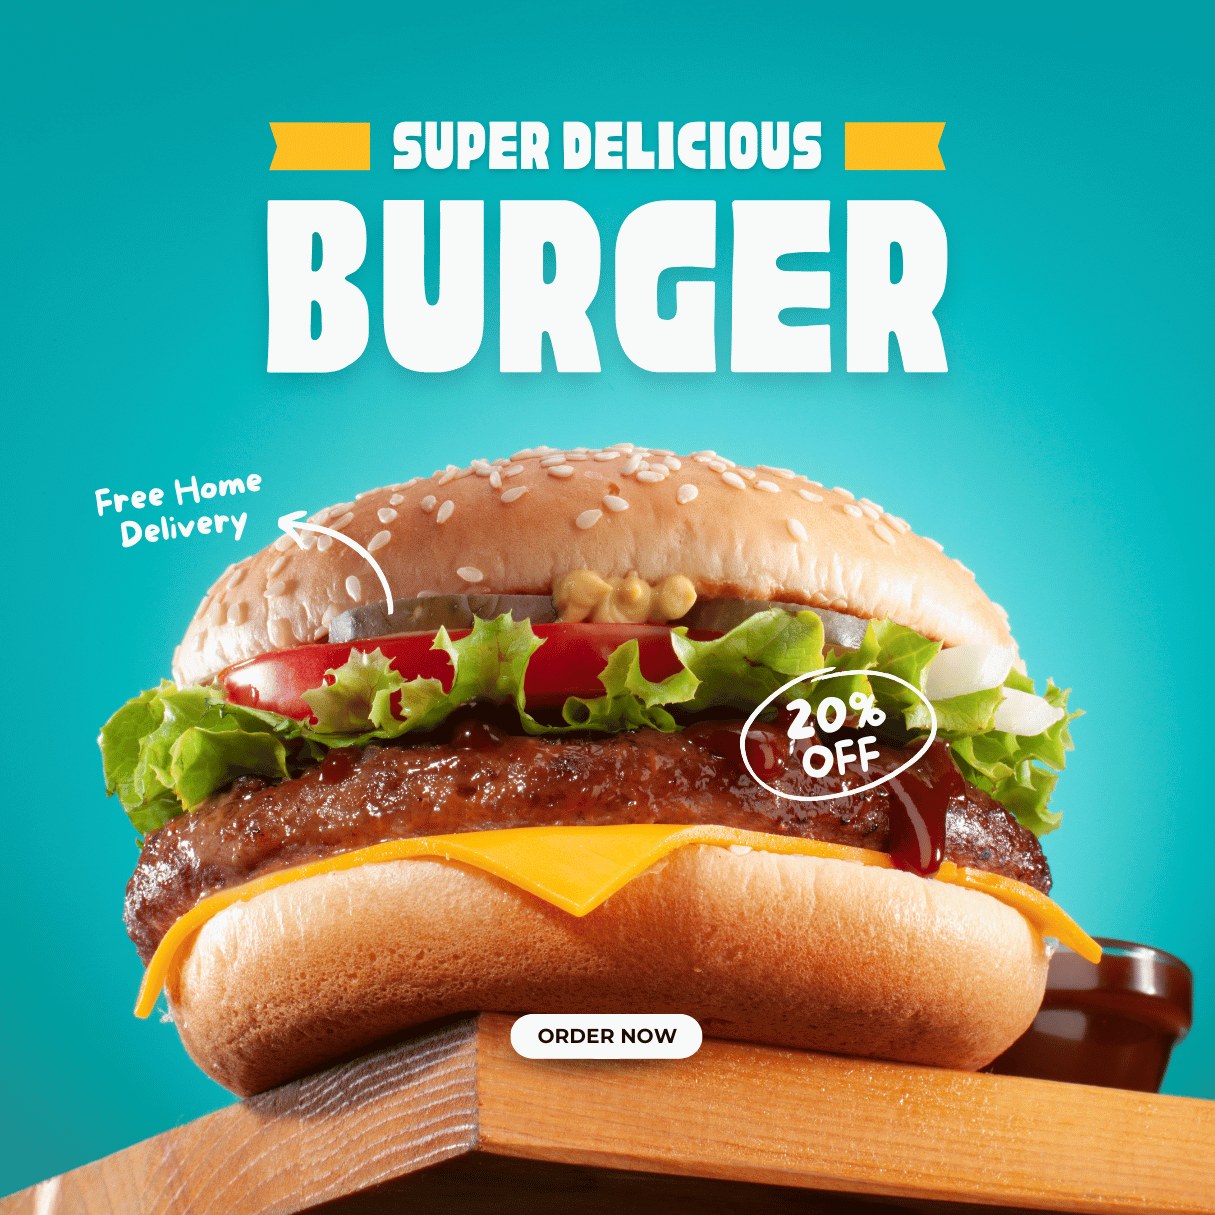 super delicious burger preview image.